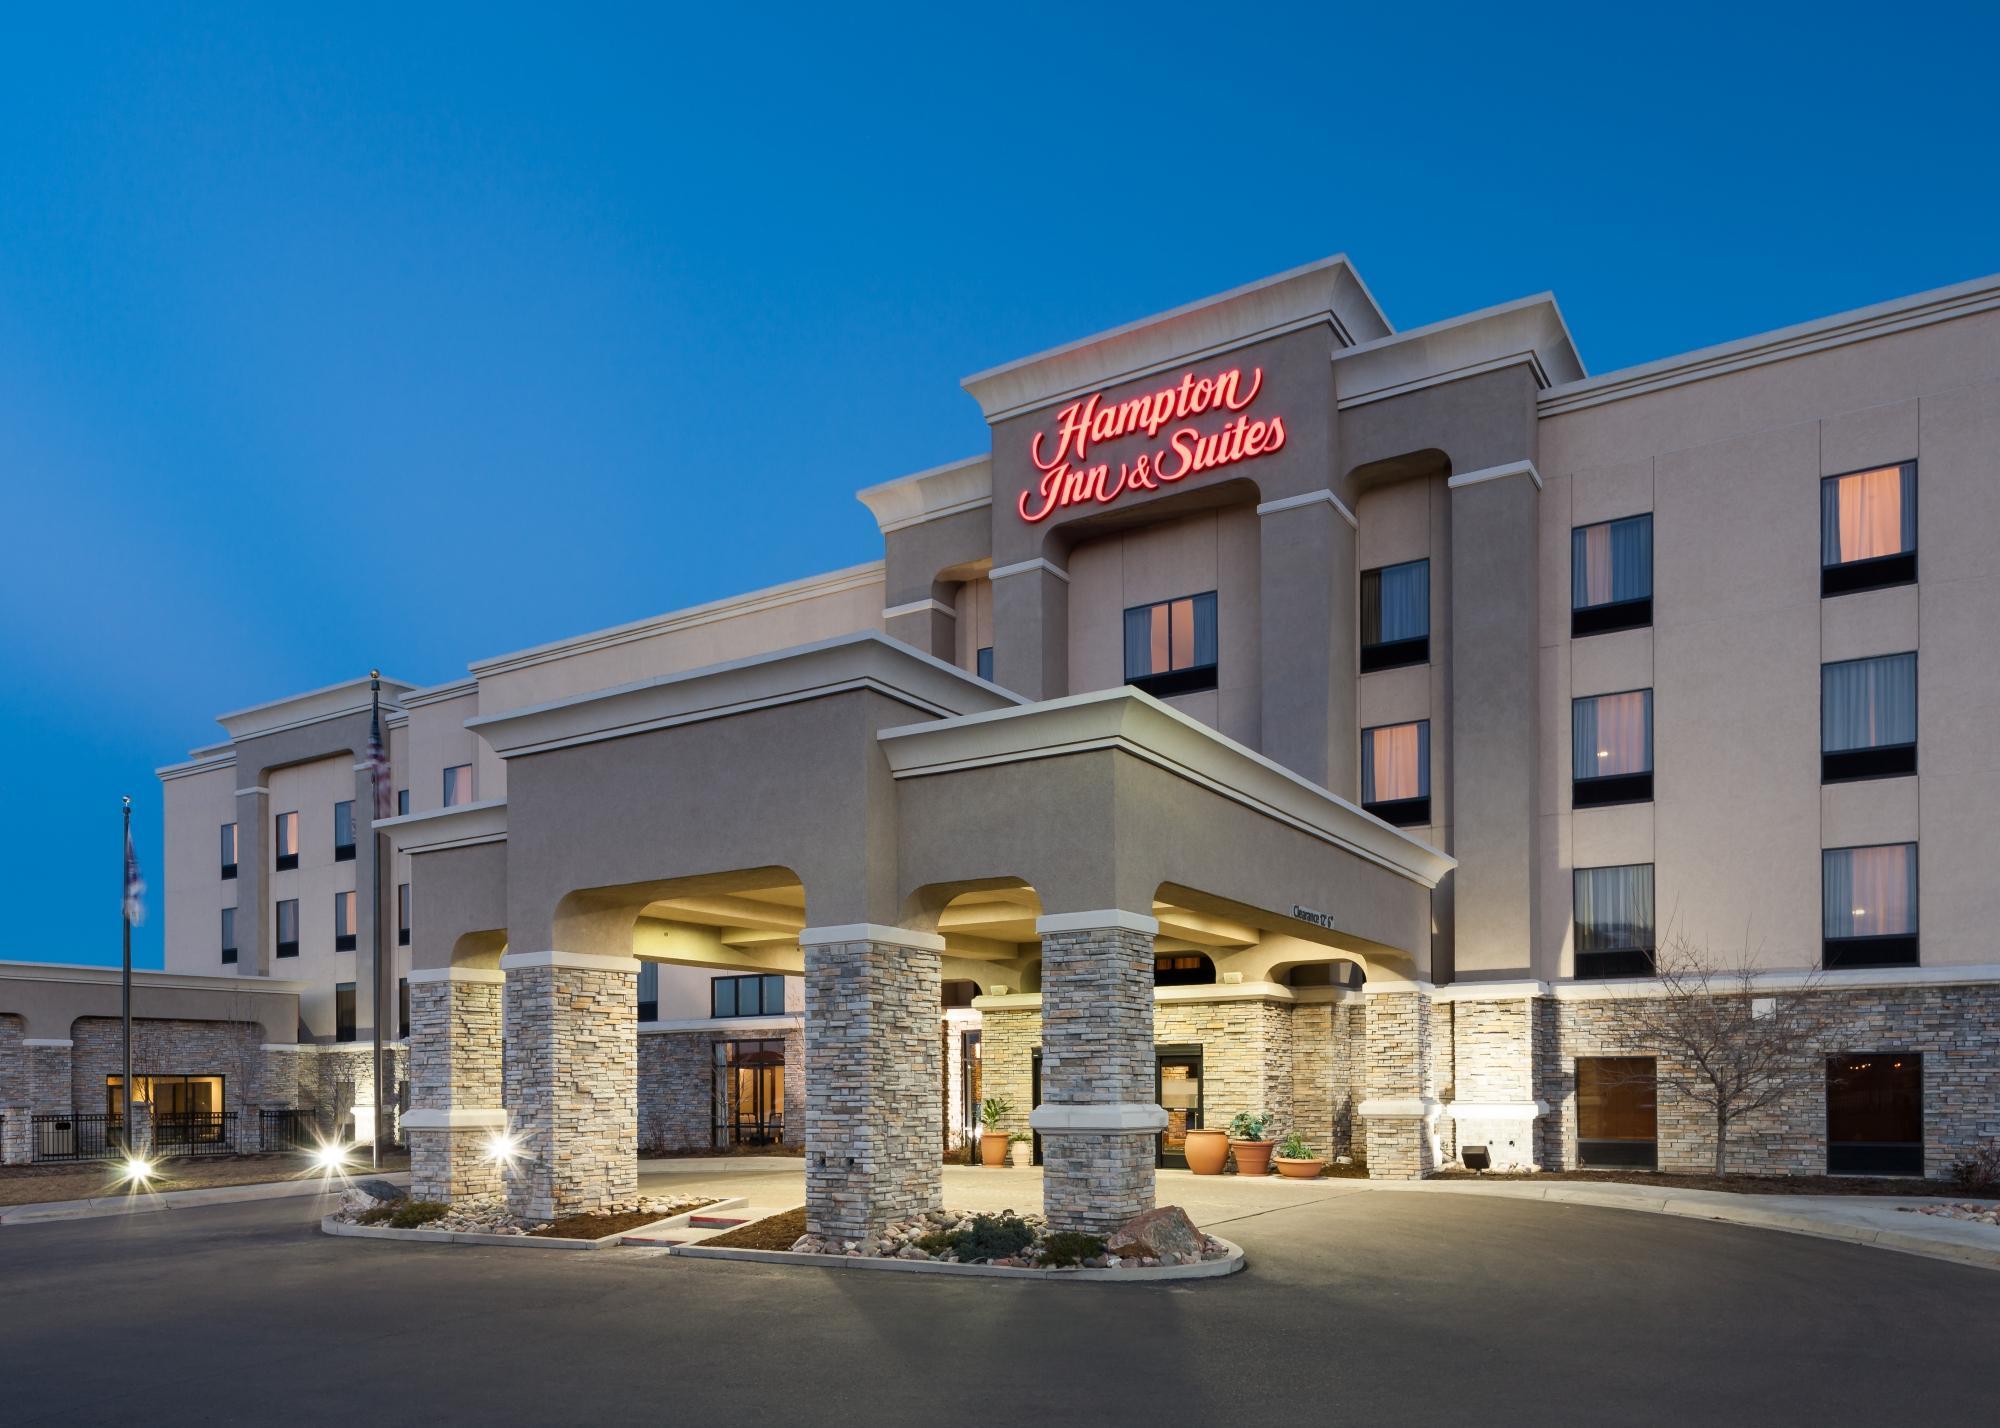 Photo of Hampton Inn & Suites Colorado Springs, Colorado Springs, CO